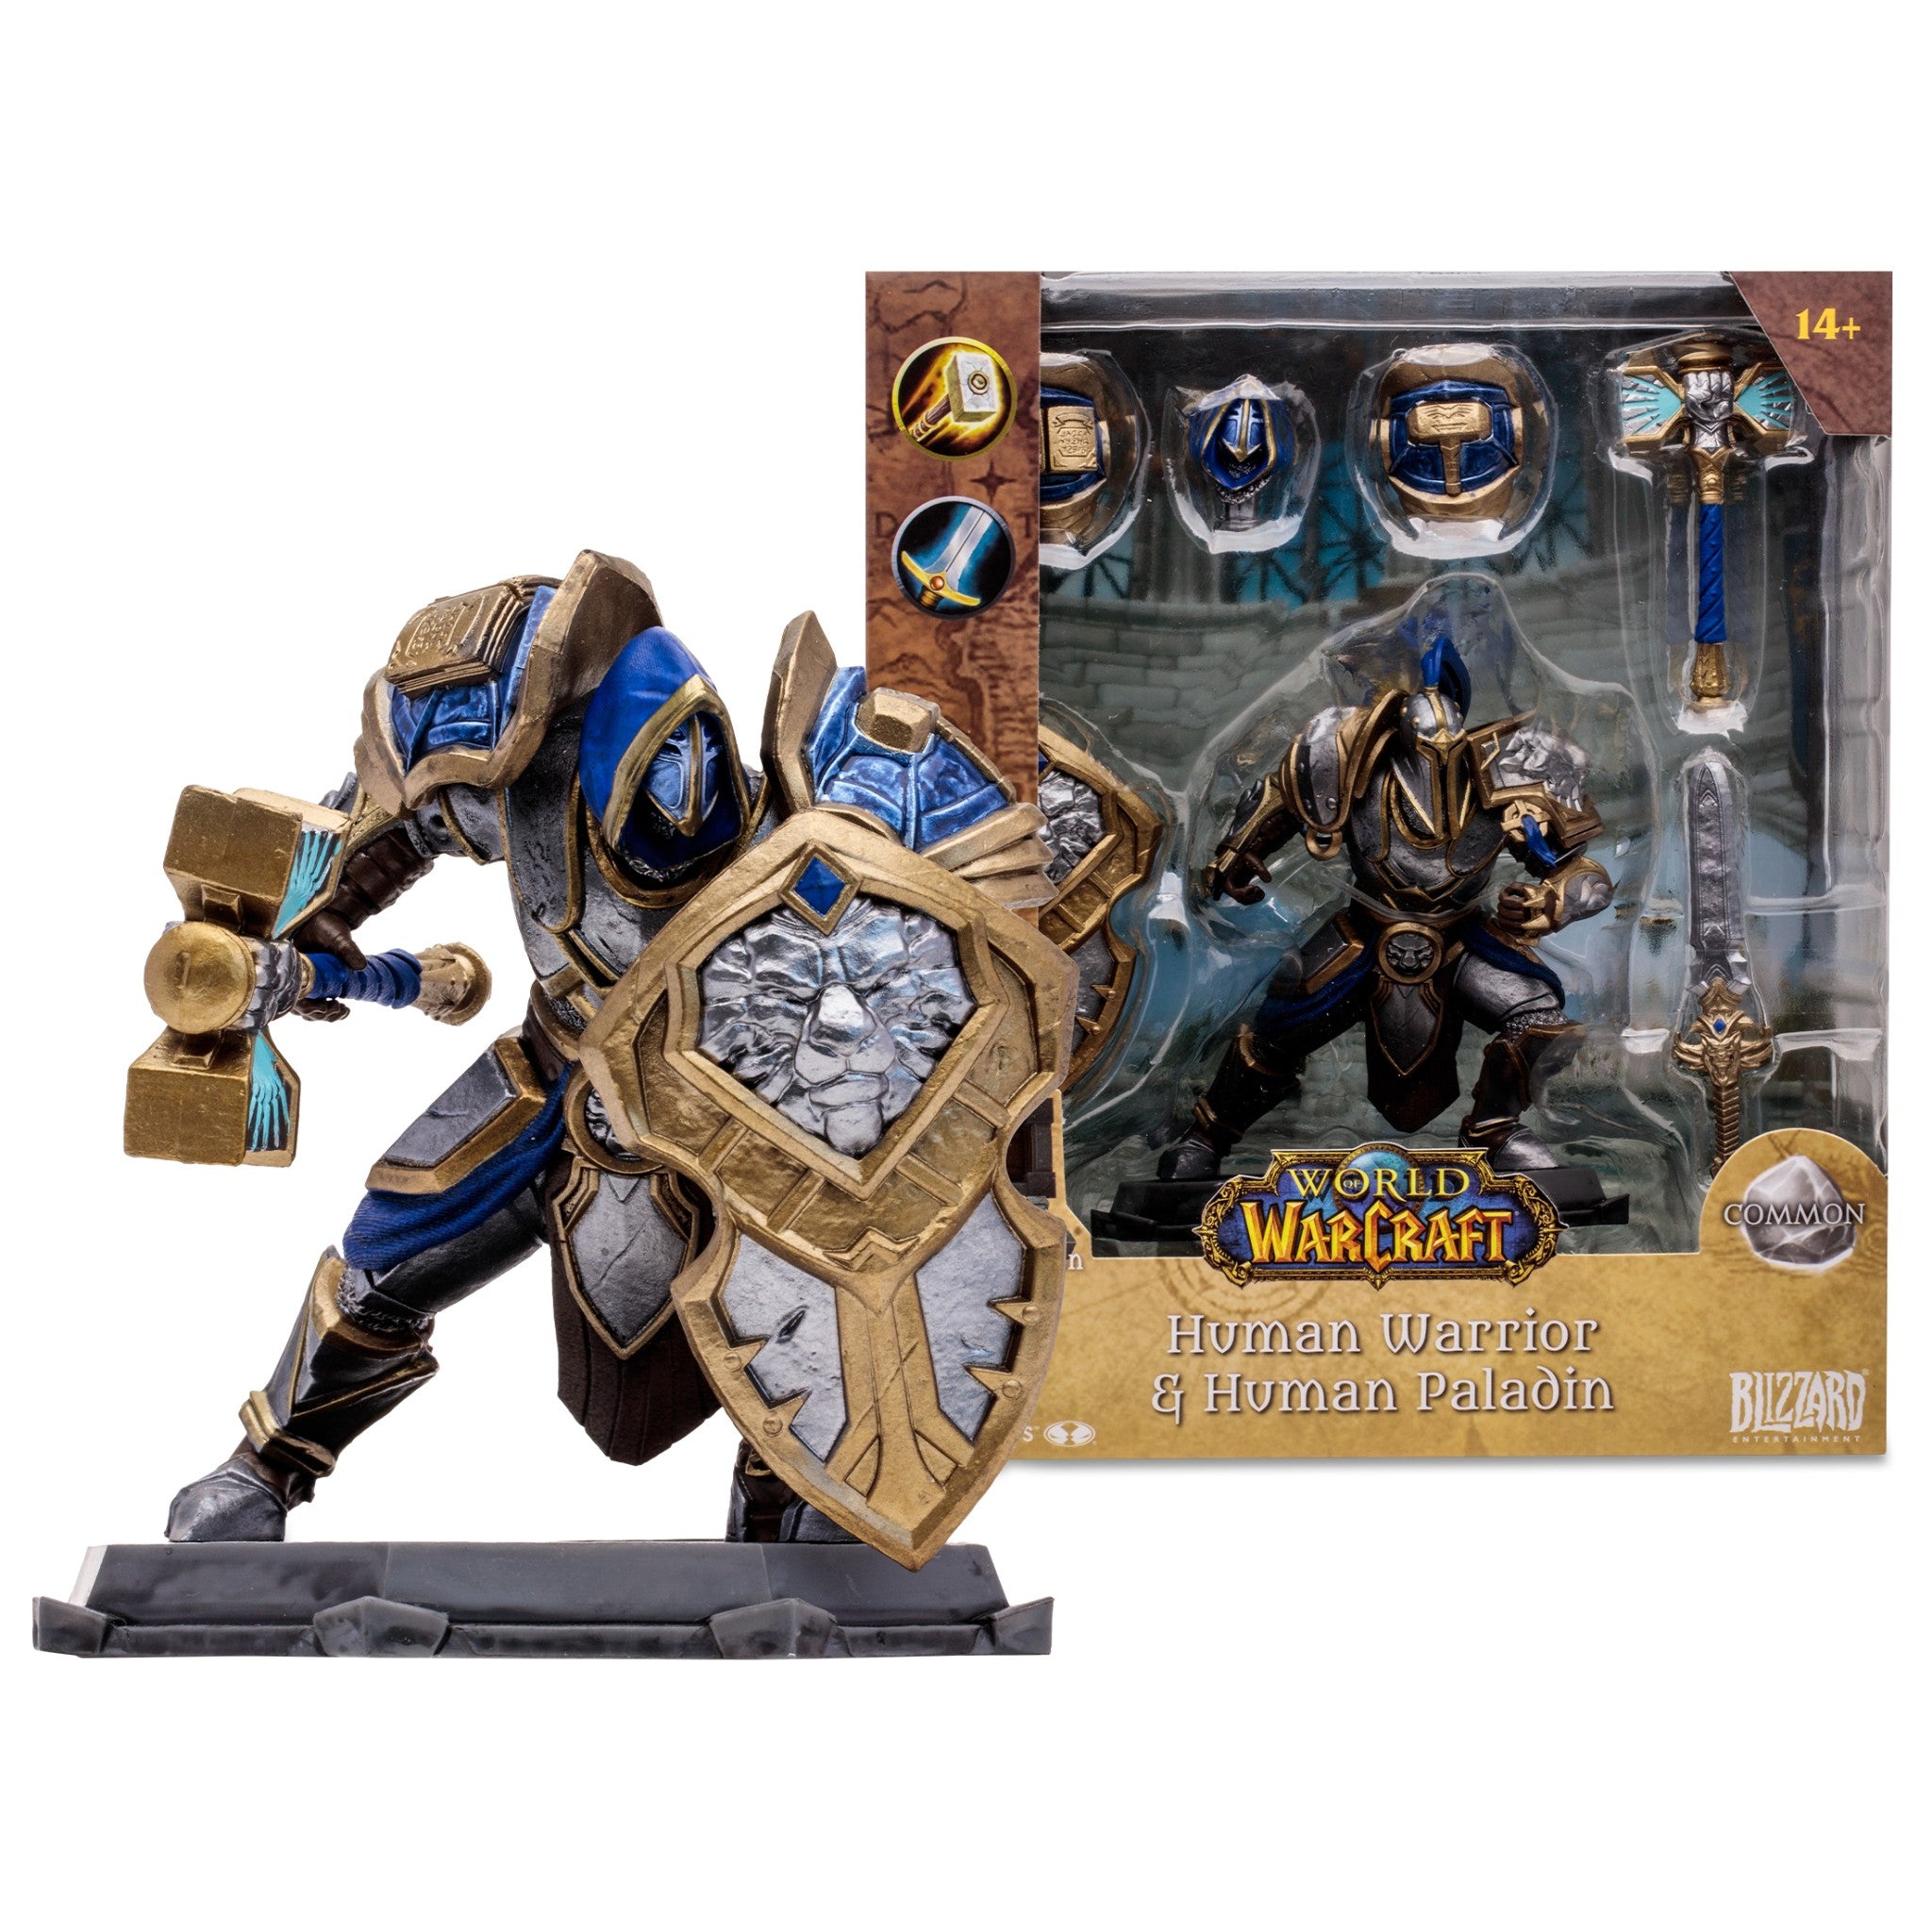 World of Warcraft Human Warrior Paladin 7" Common Figure - McFarlane Toys-1